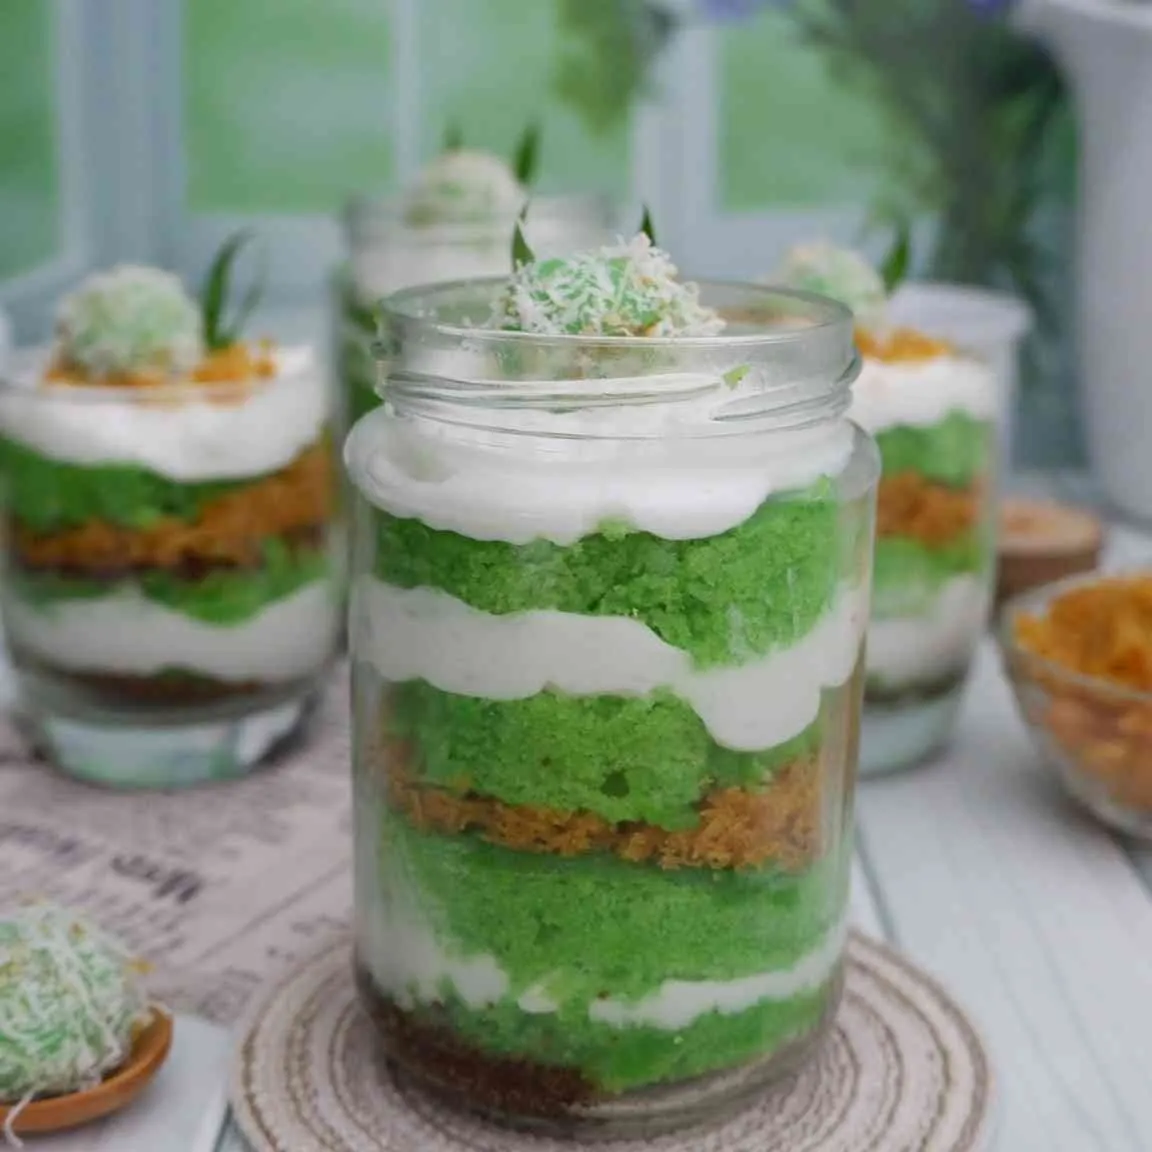 Klepon Cake in A Jar #YummyOCC13